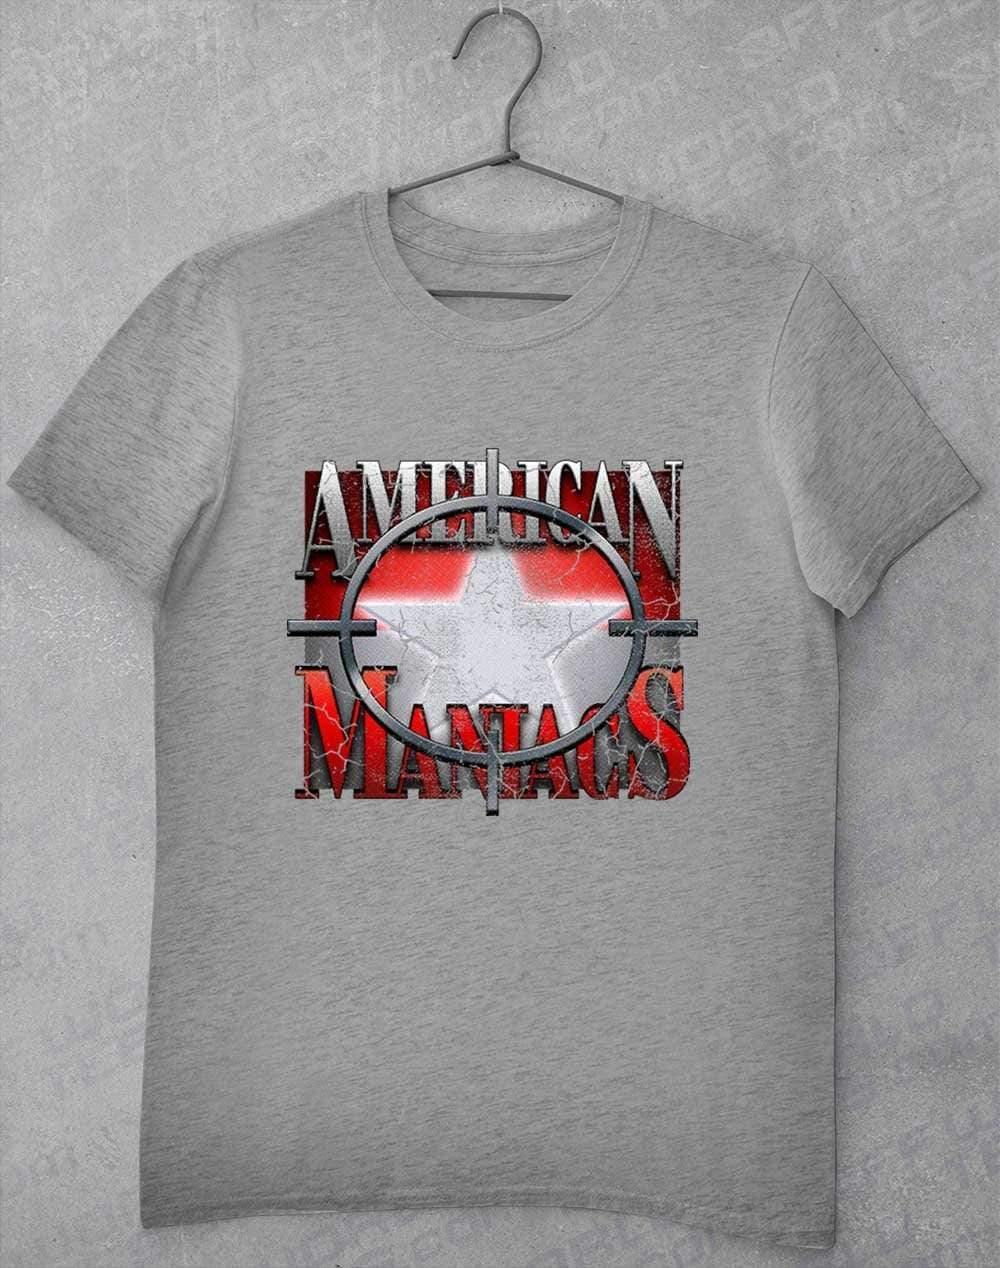 American Maniacs - T-Shirt S / Heather Grey  - Off World Tees